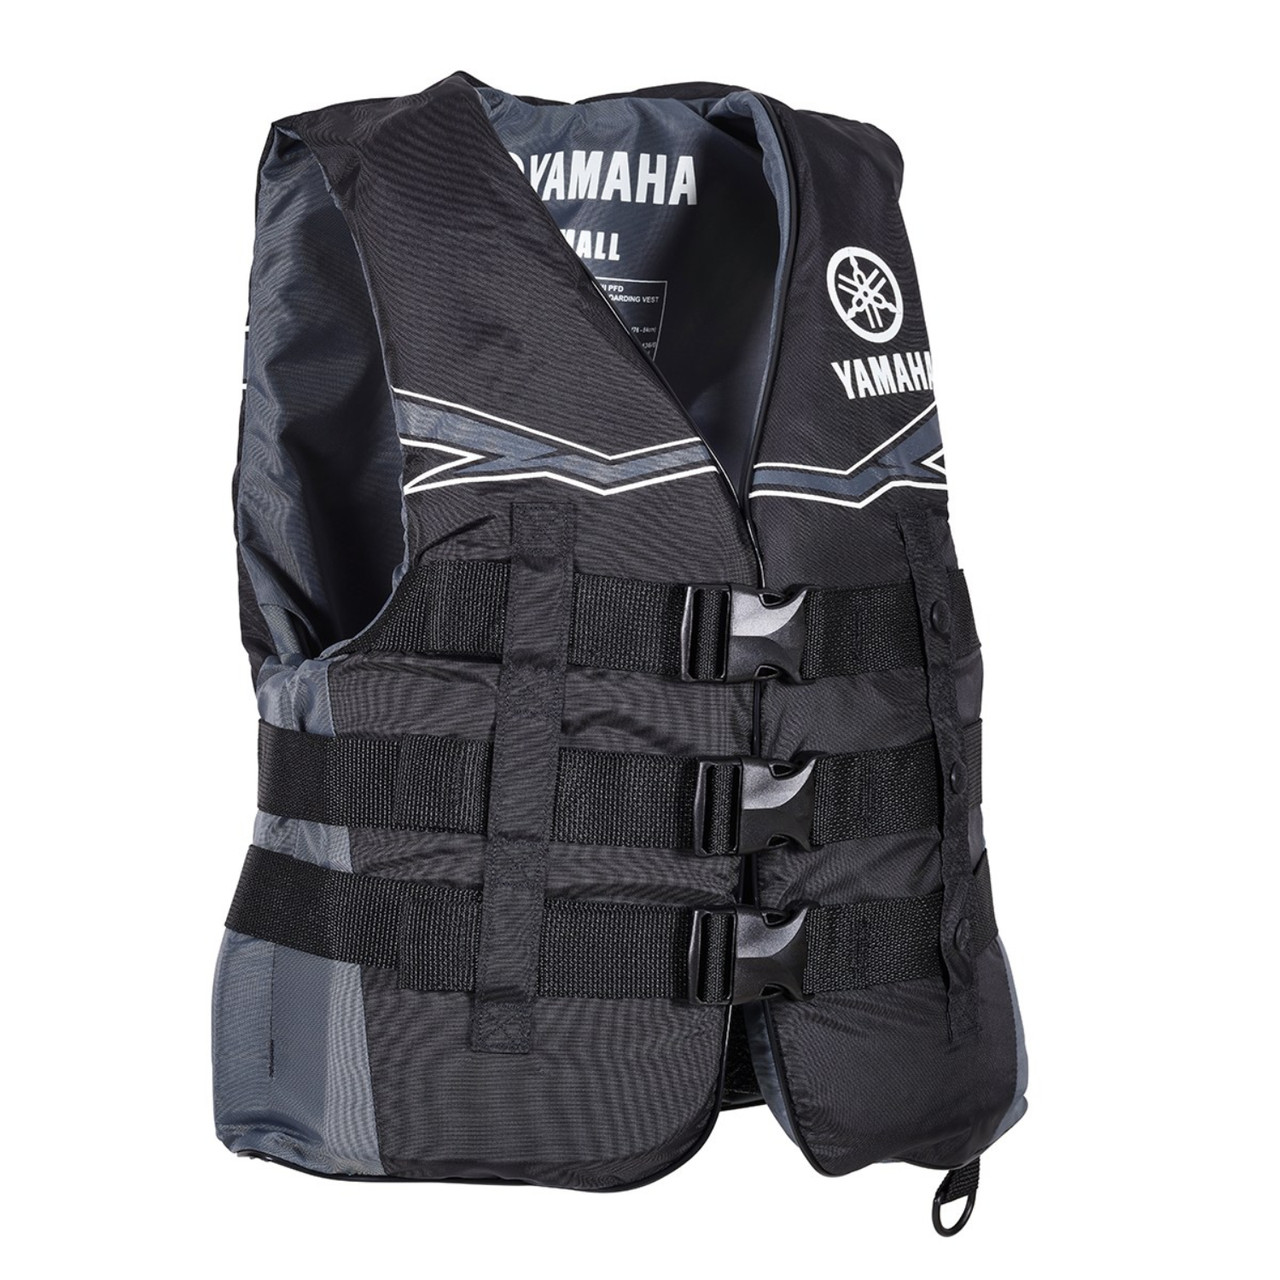 Yamaha New OEM Adult Men's SM Black Nylon Life Jacket/PFD MAR-21V3B-BK-SM